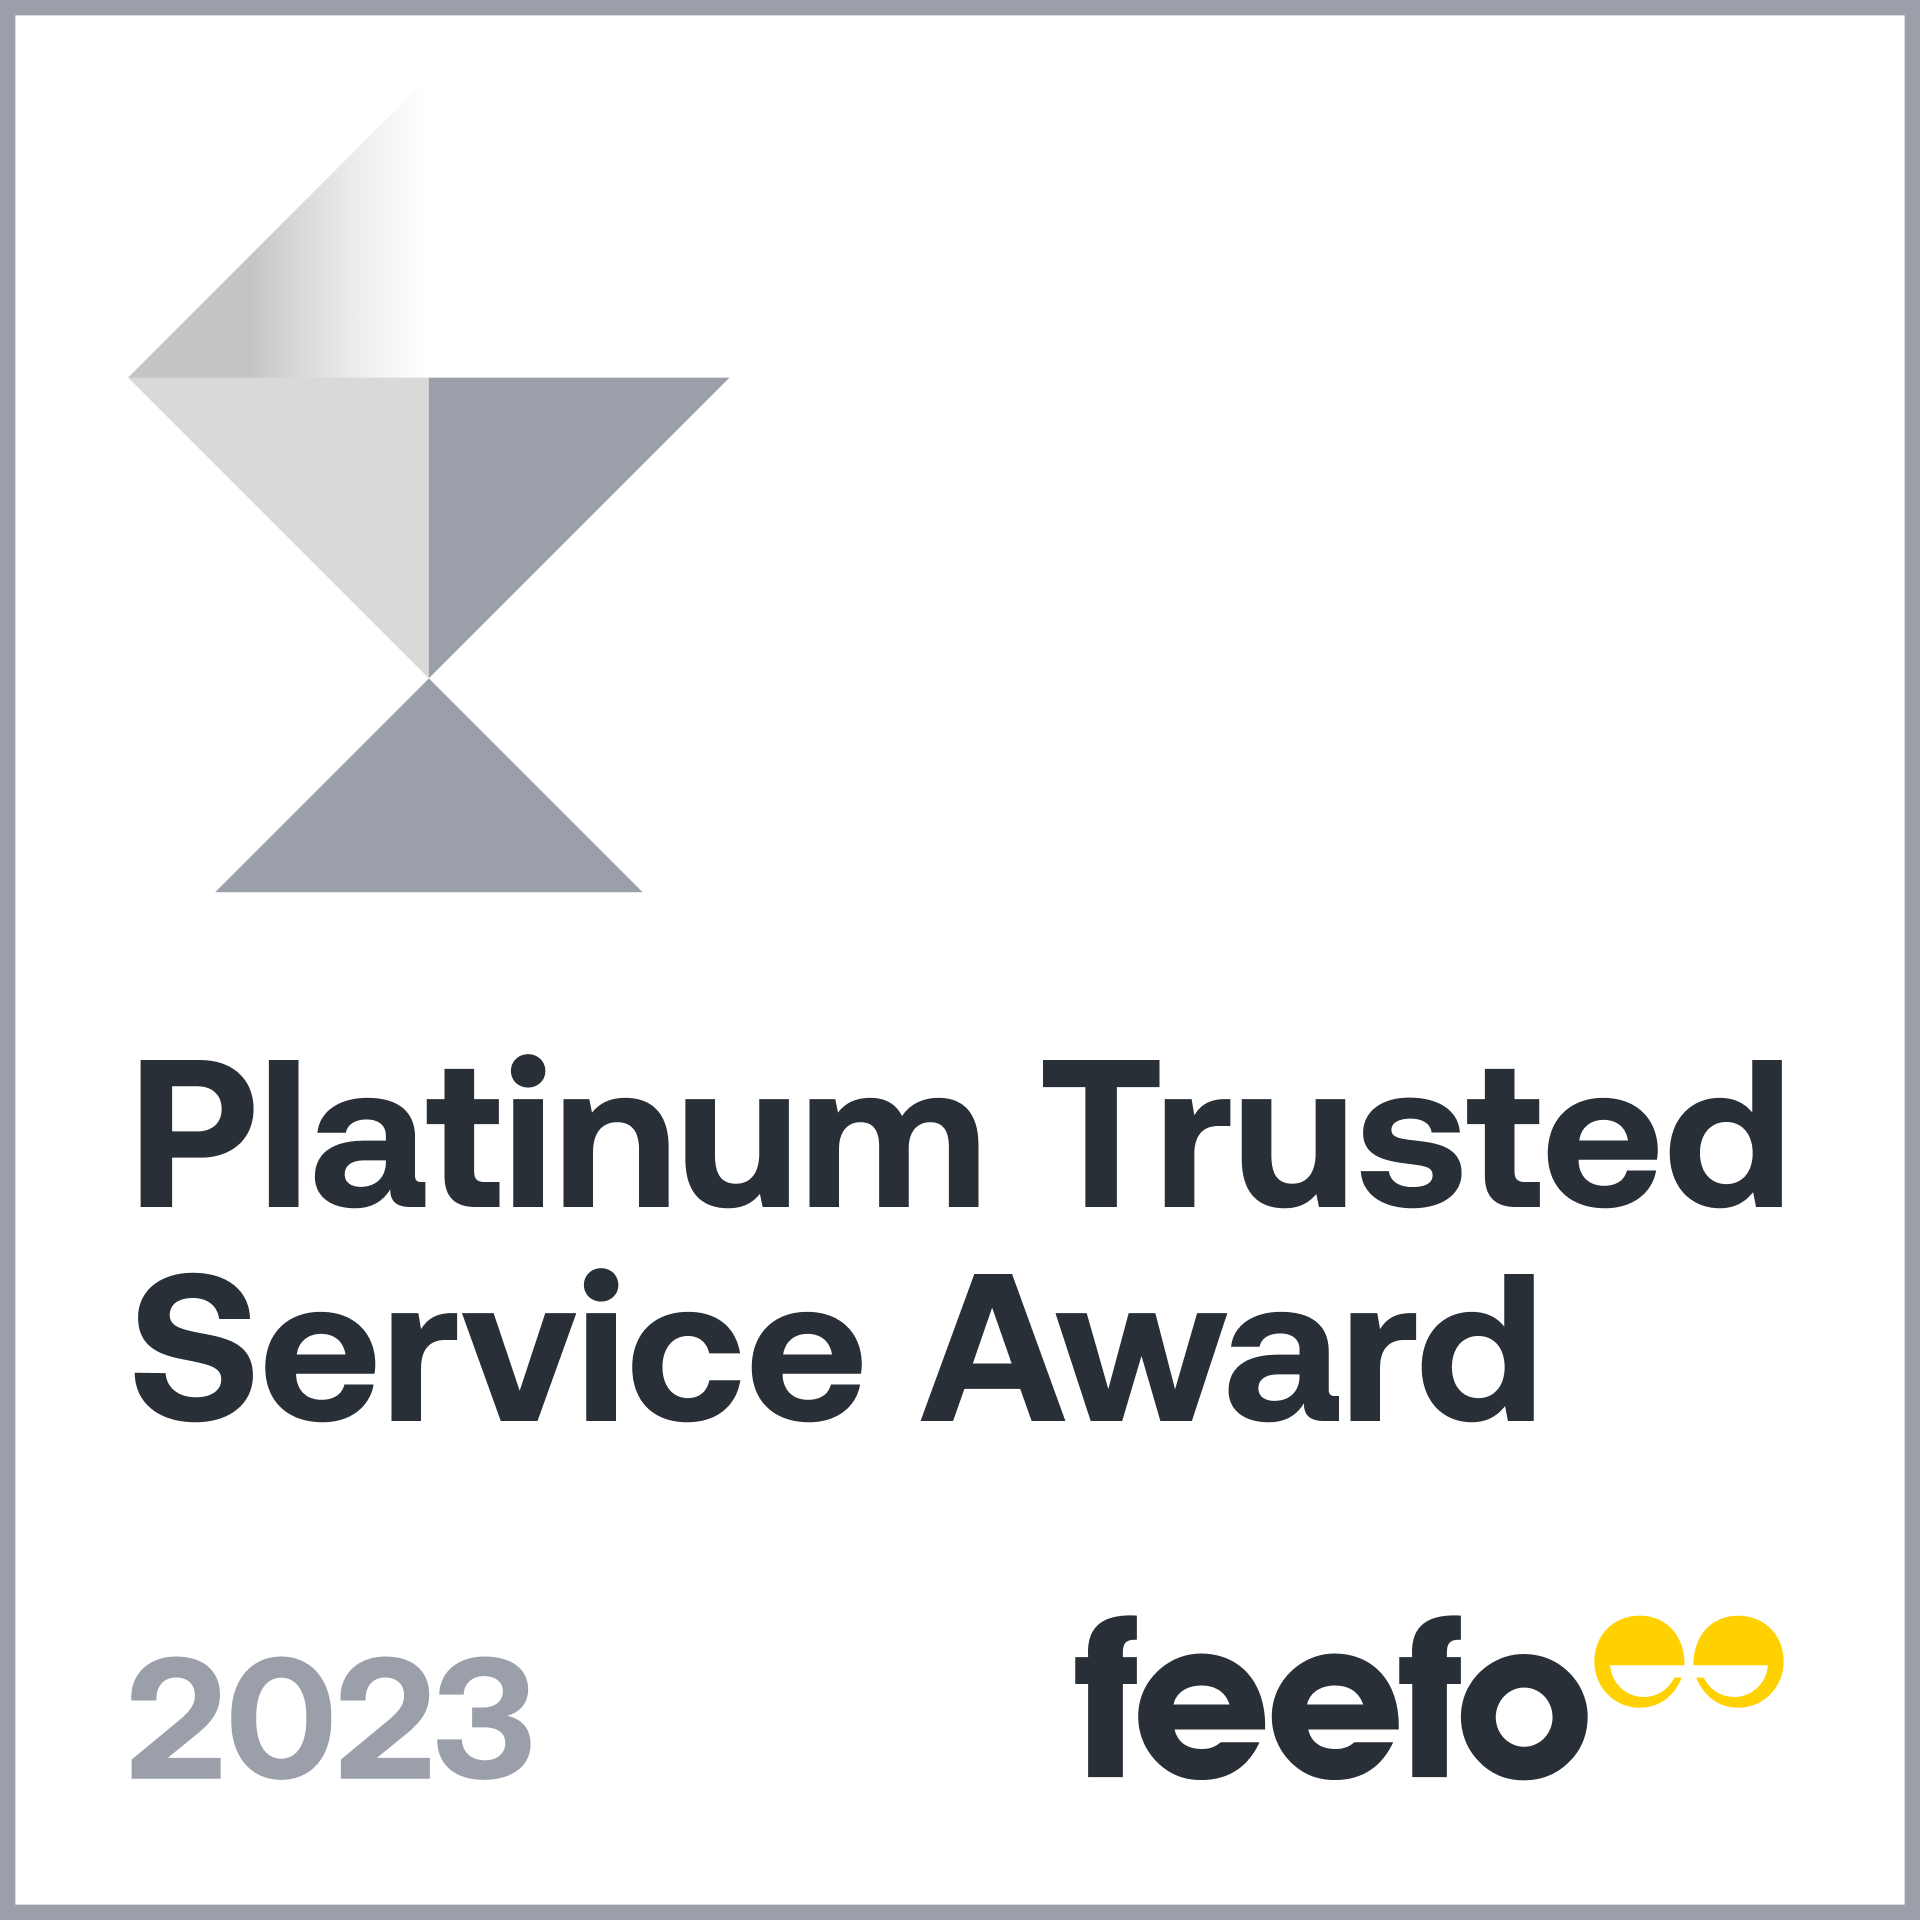 Feefo Plainum Trusted Service 2023 Award logo